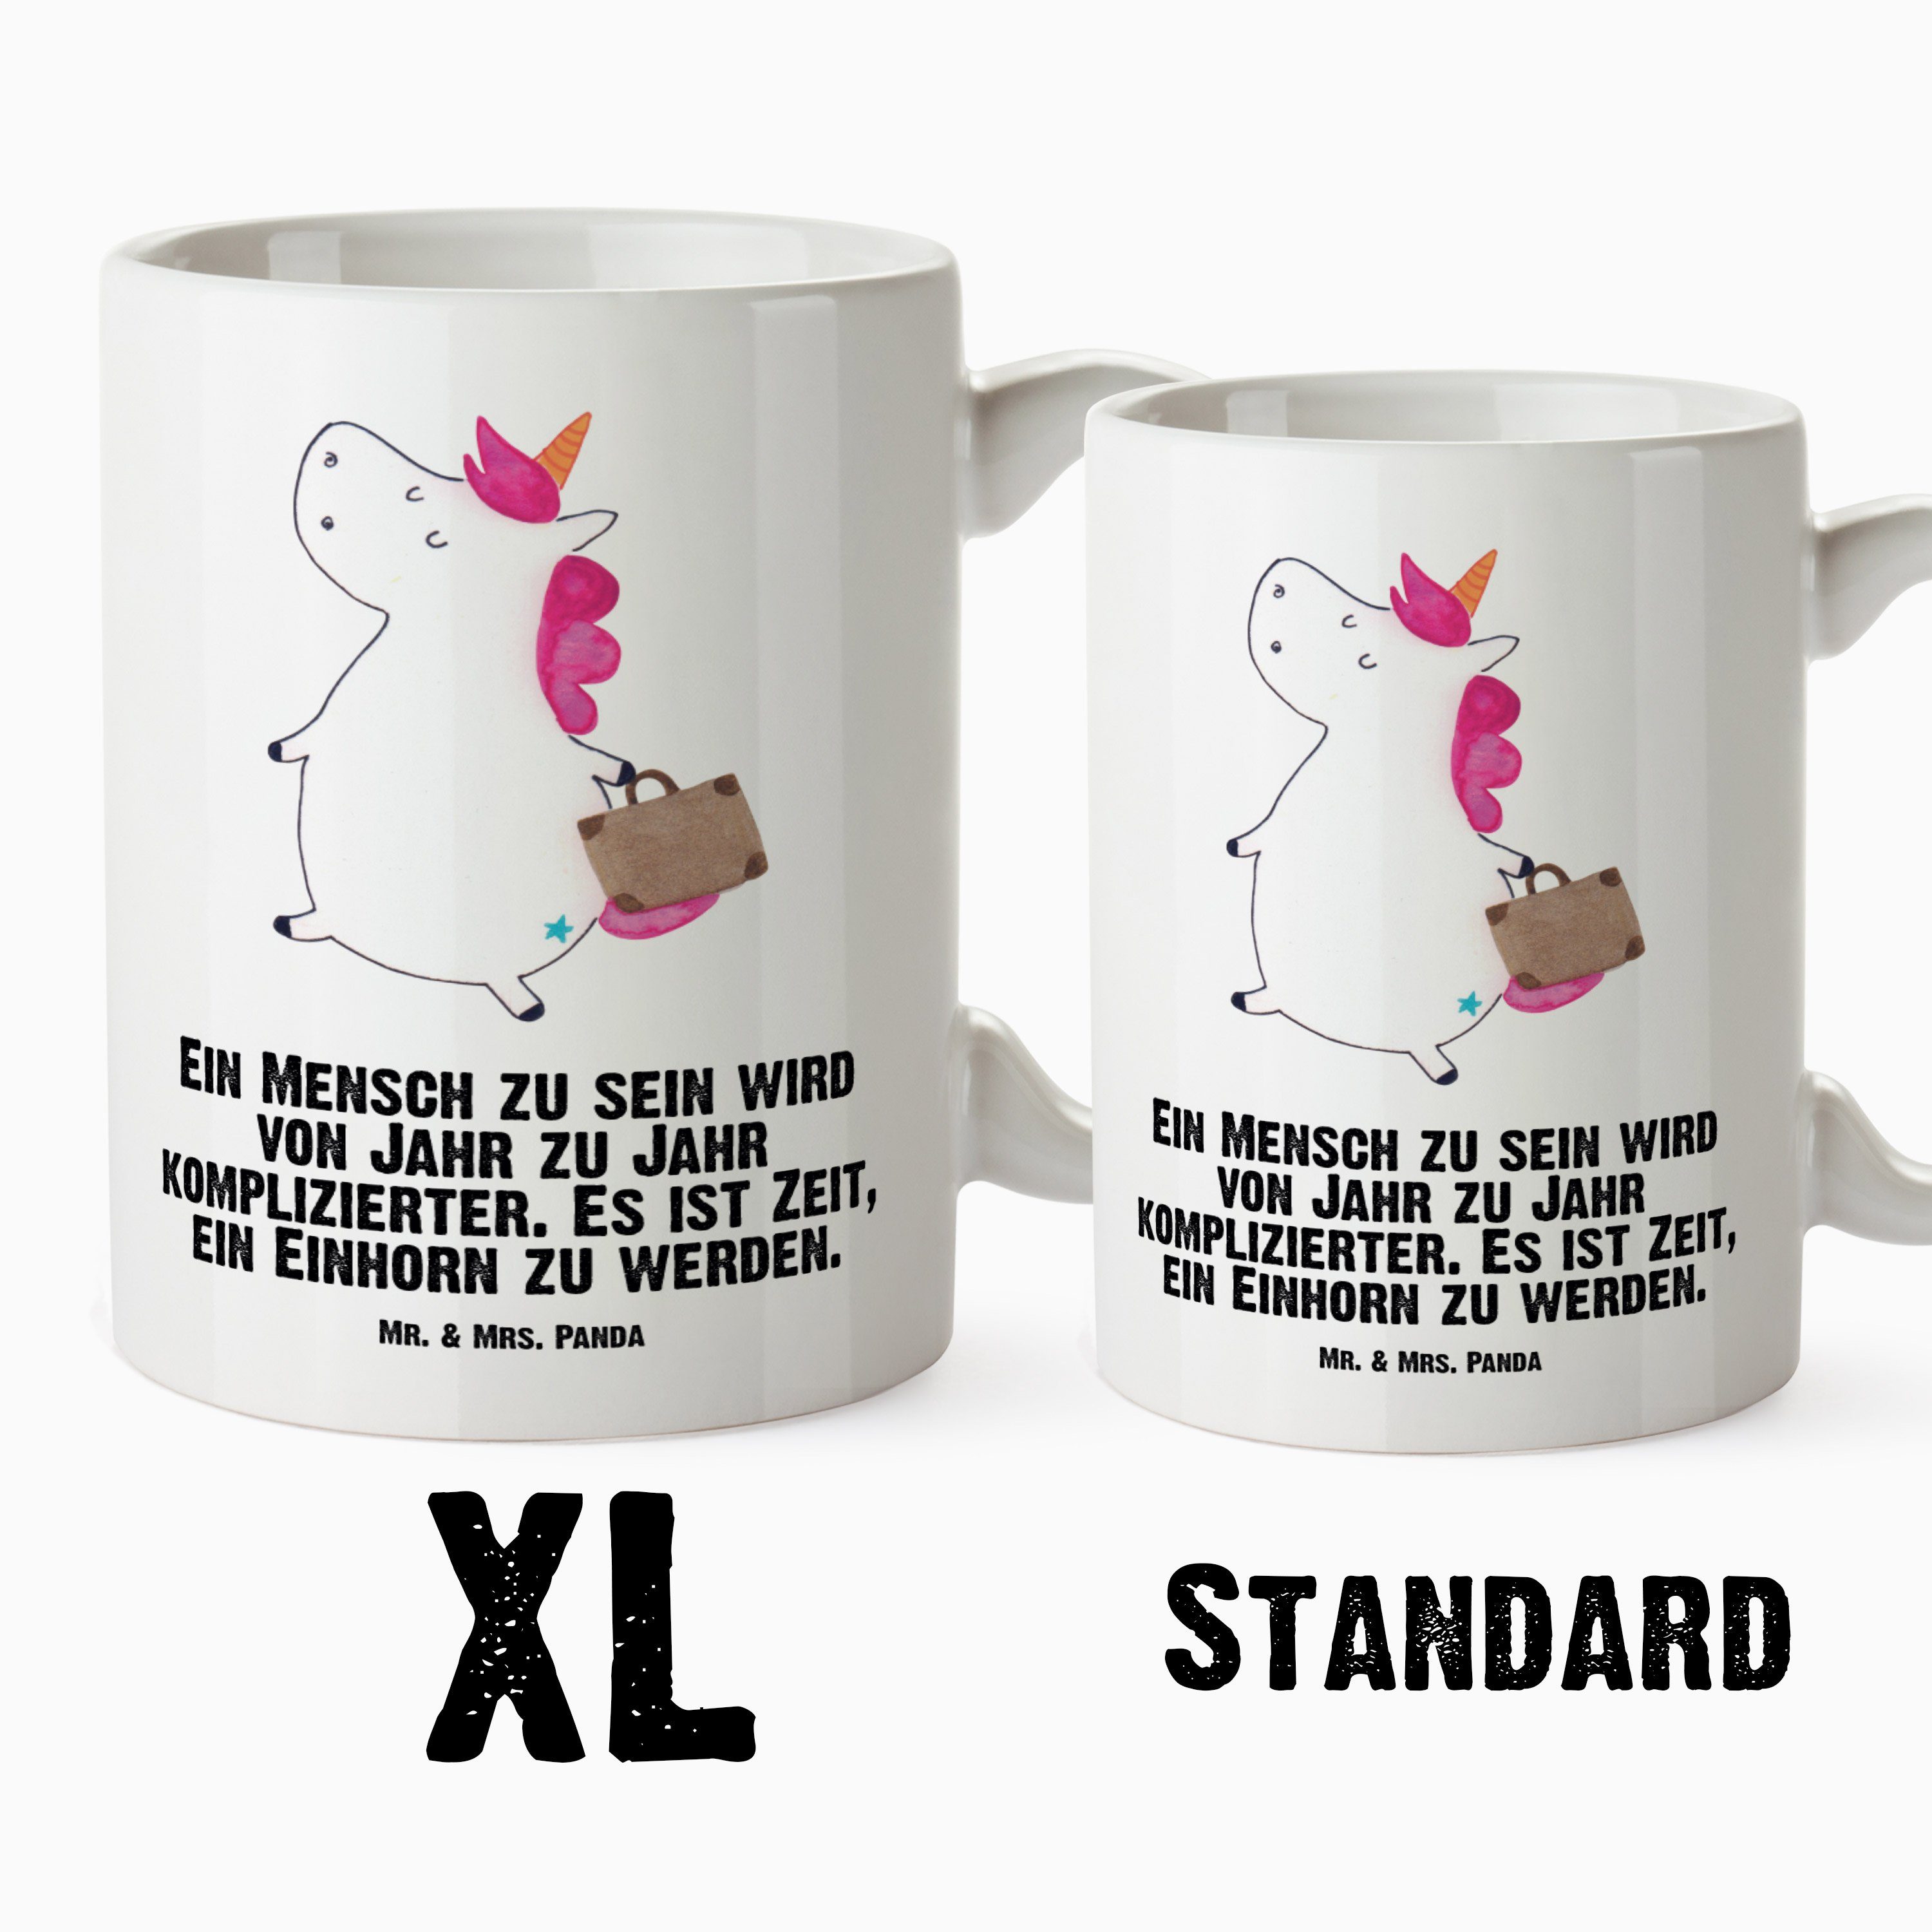 Mr. & Mrs. Panda Tasse Grosse Kaffeetasse, - - XL Koffer un, Einhorn Teetasse, XL Geschenk, Tasse Keramik Weiß